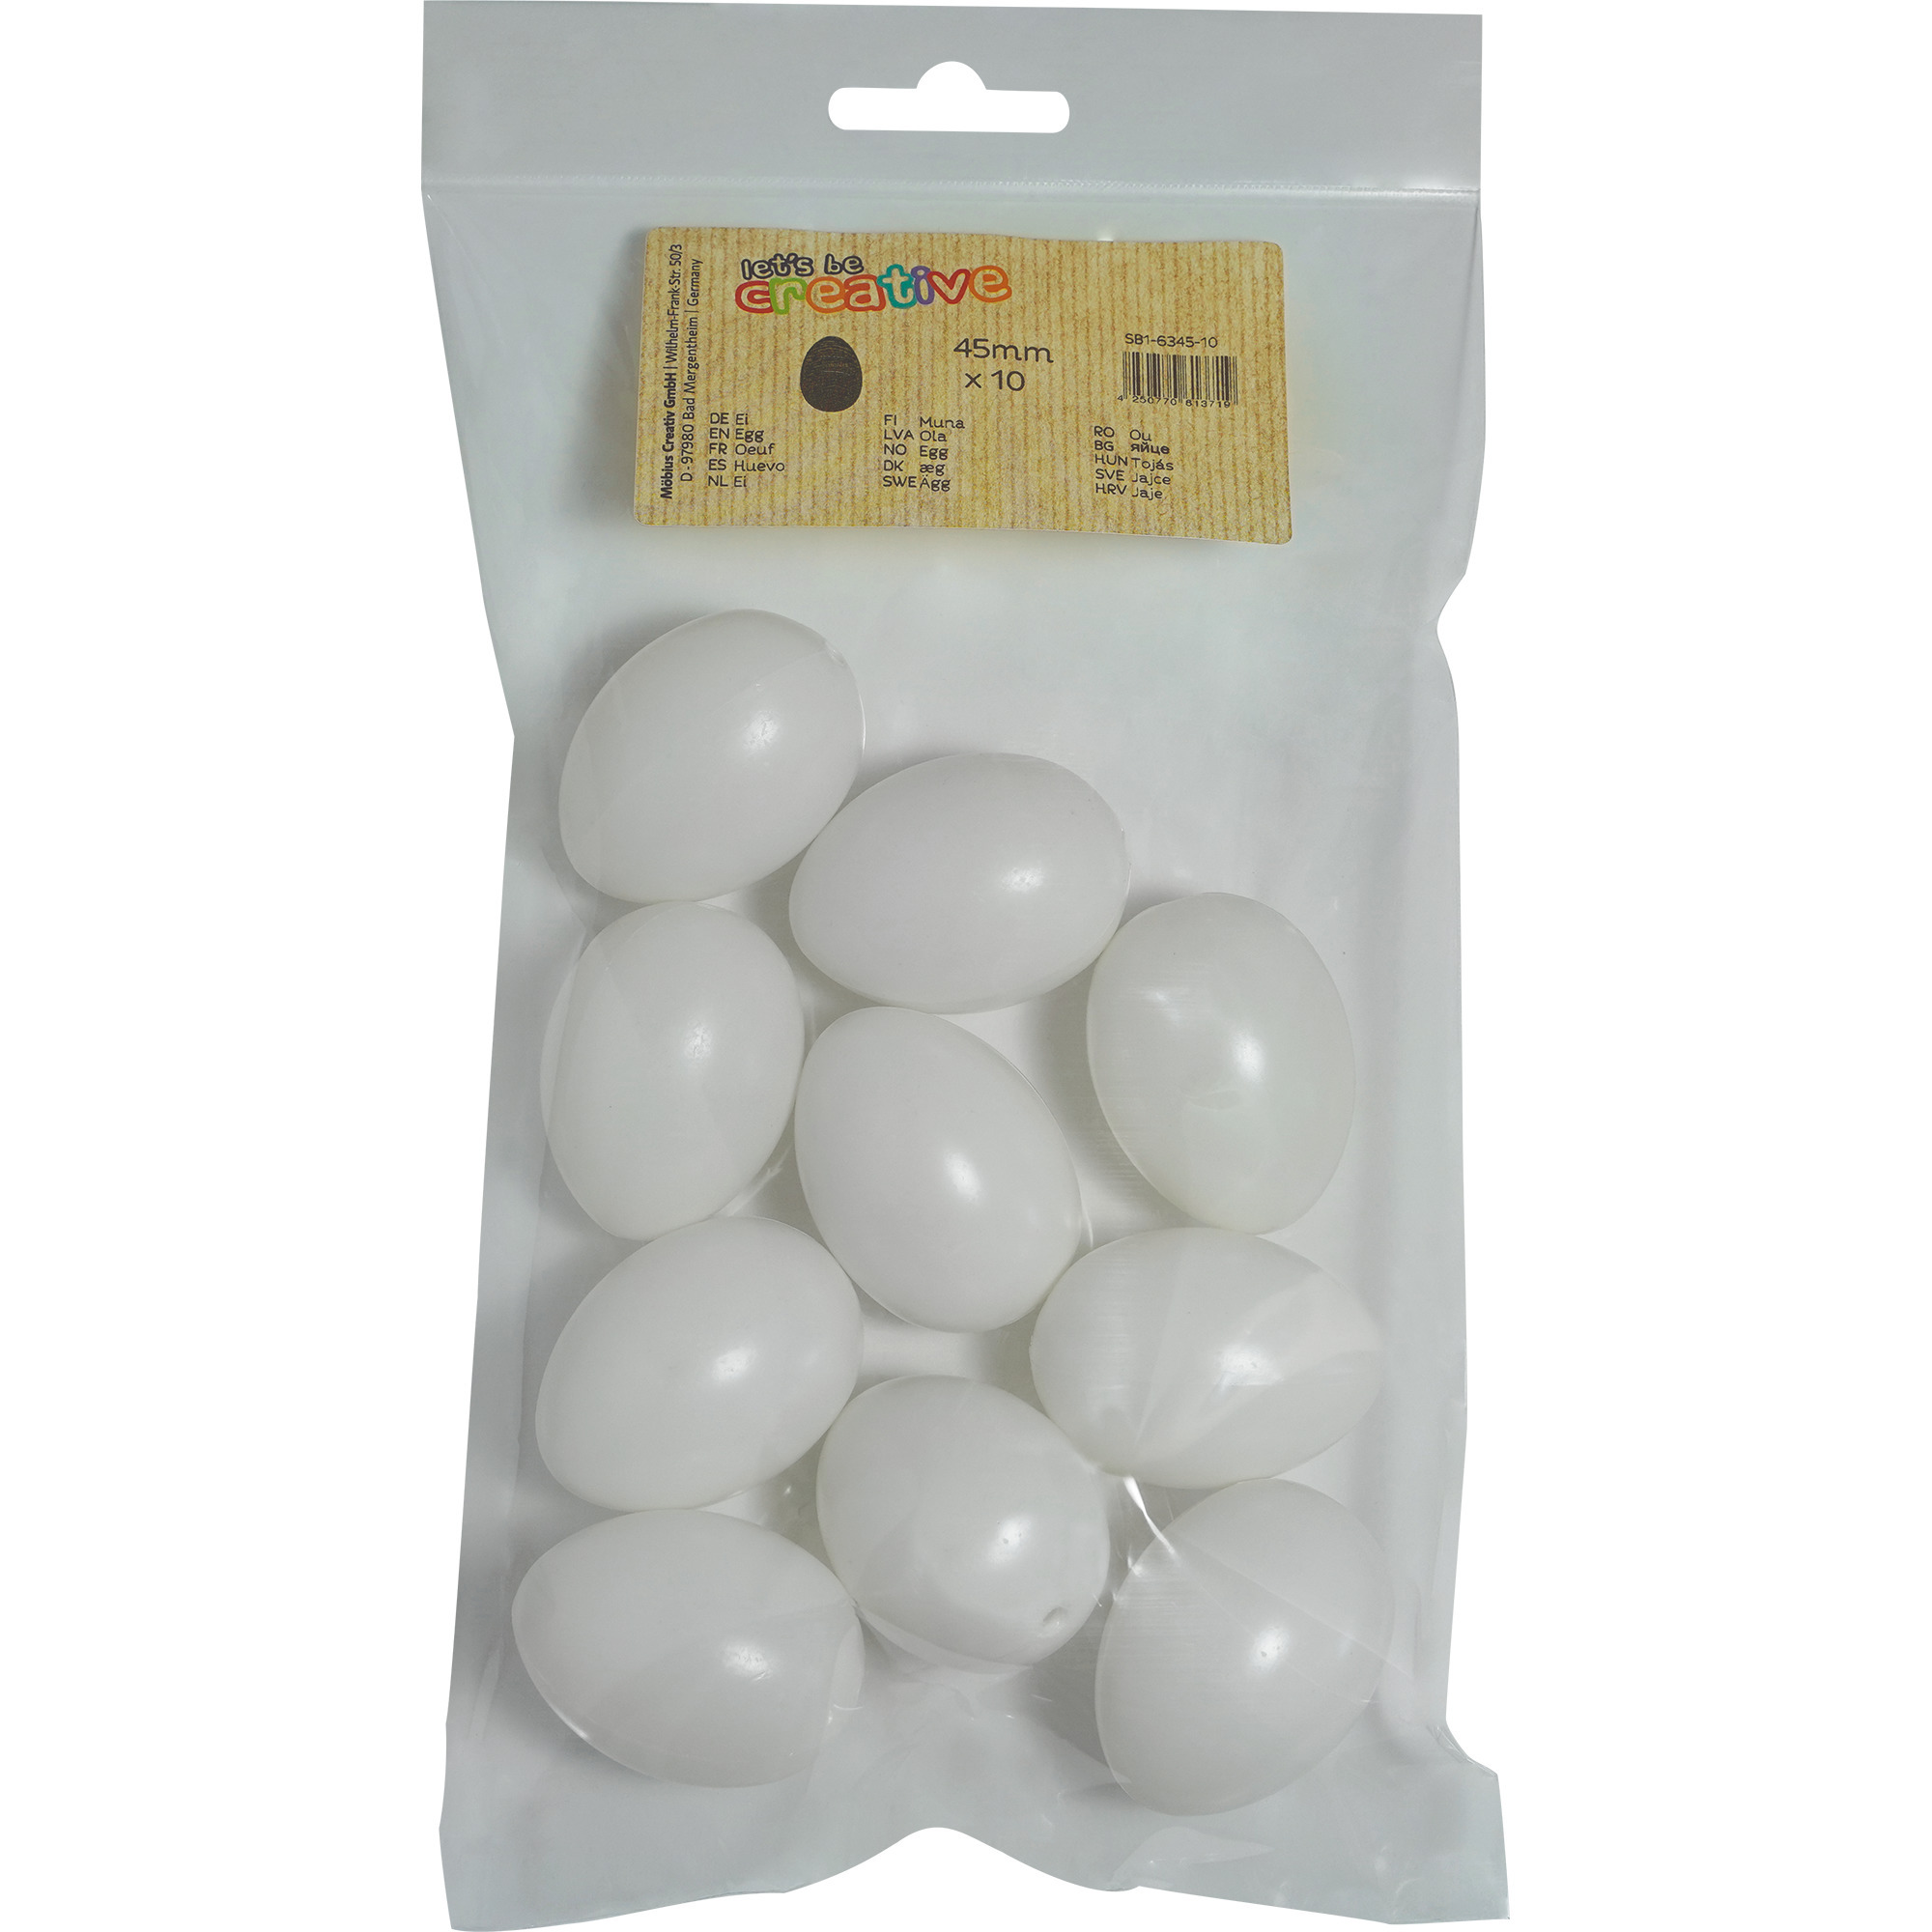 40x stuks hobby knutselen eieren van plastic 4,5 cm